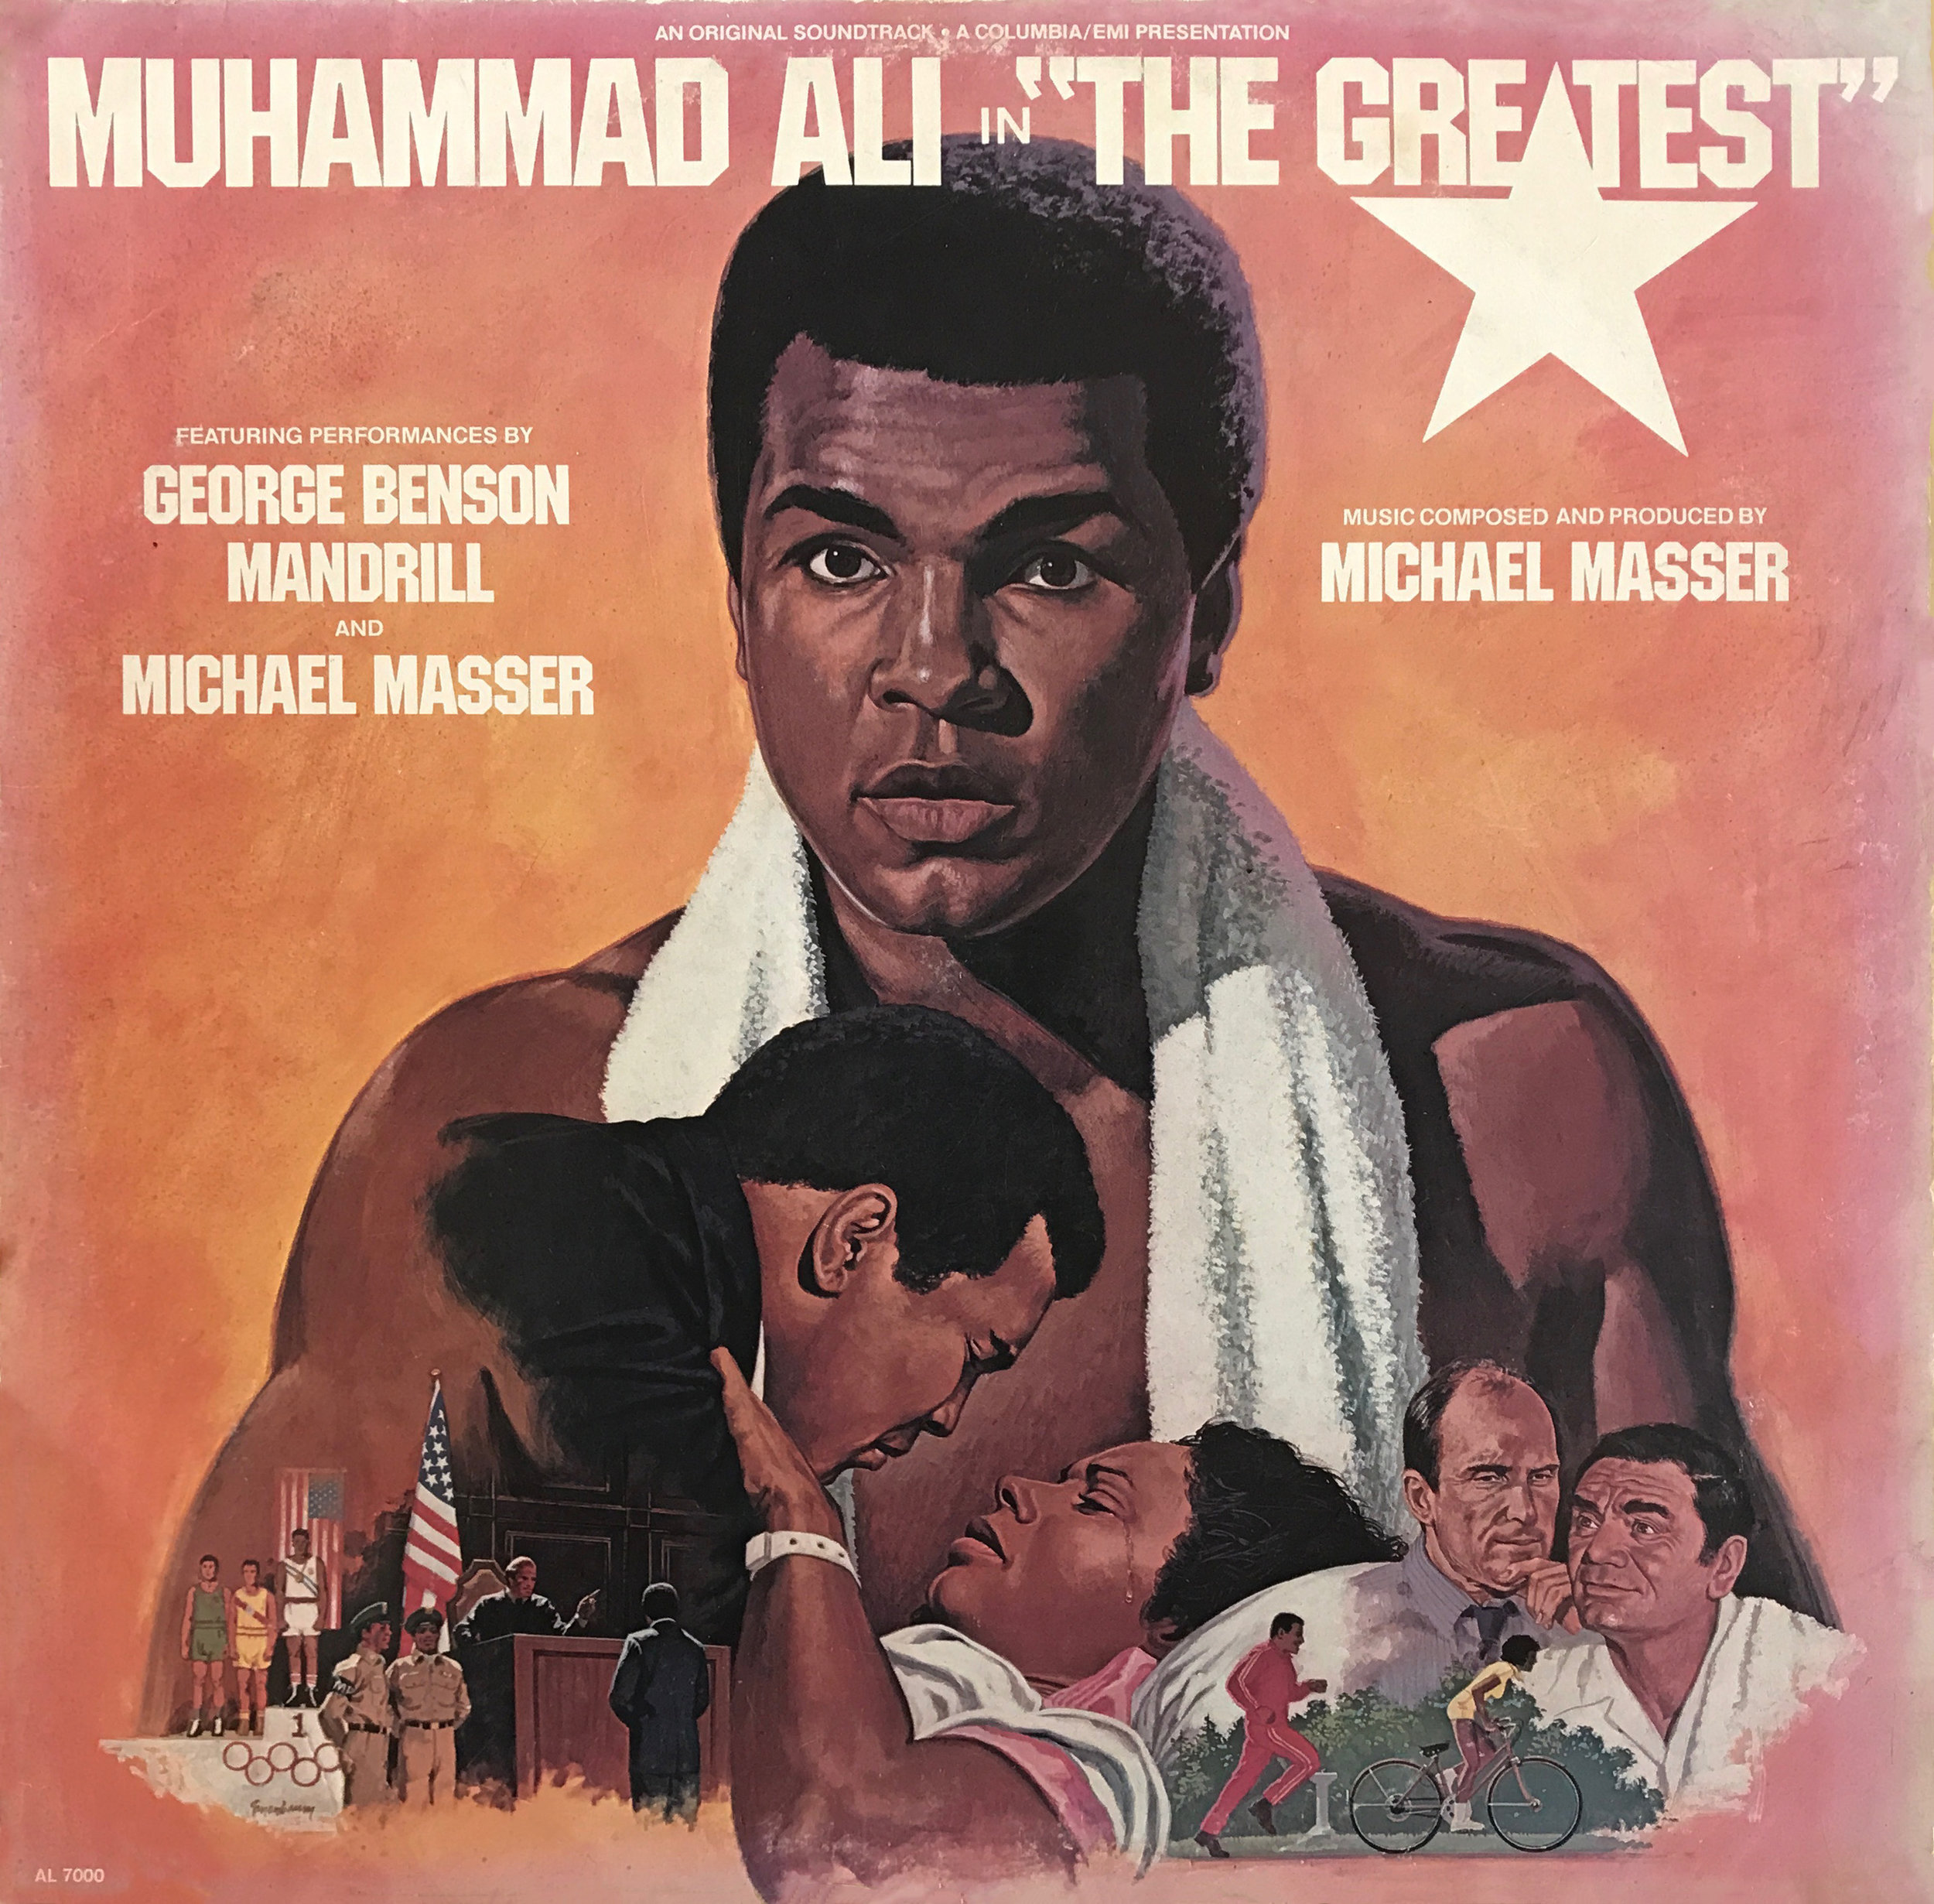 "The Greatest" [Soundtrack] (1977)